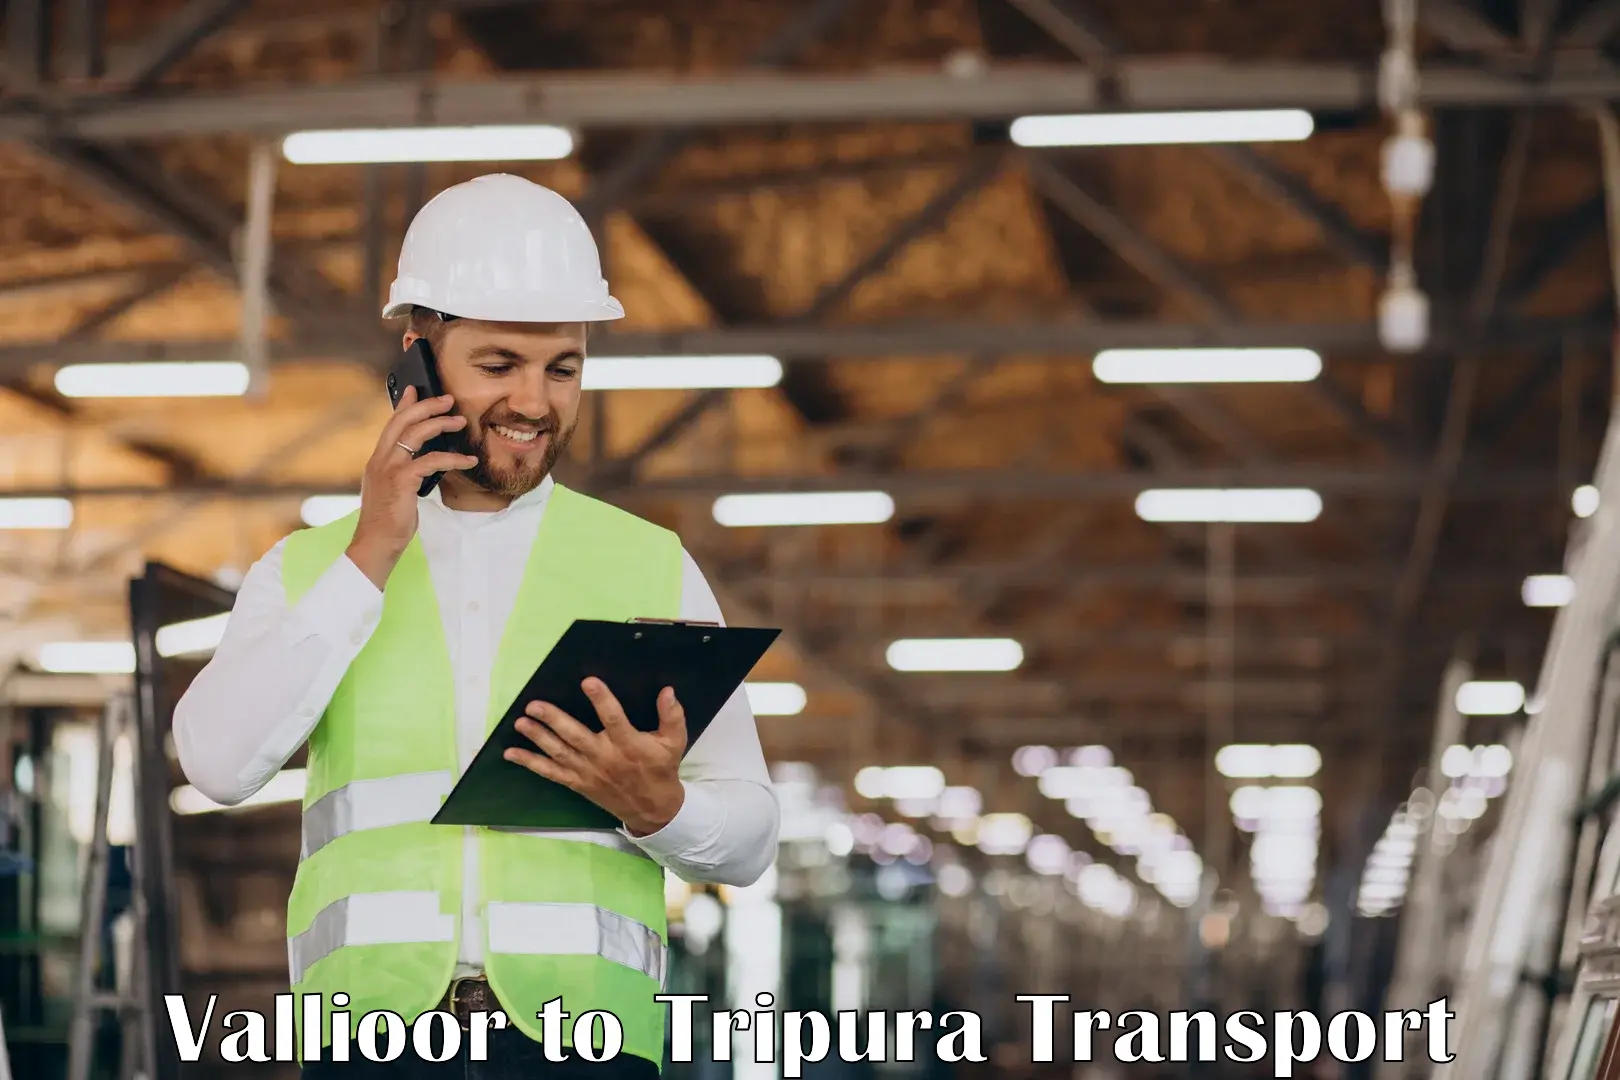 Transport in sharing Vallioor to Udaipur Tripura